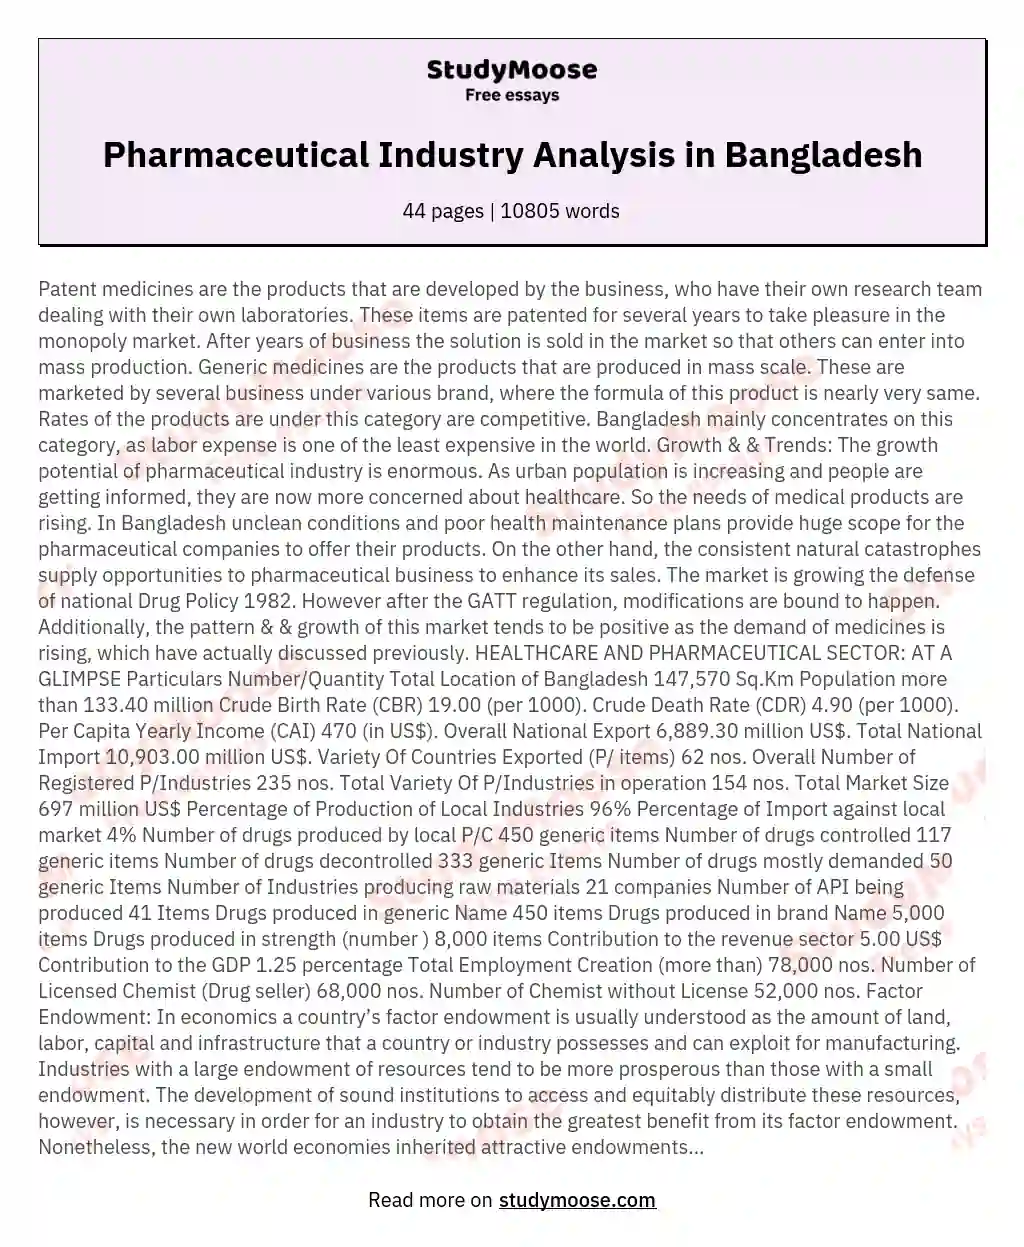 Pharmaceutical Industry Analysis in Bangladesh essay